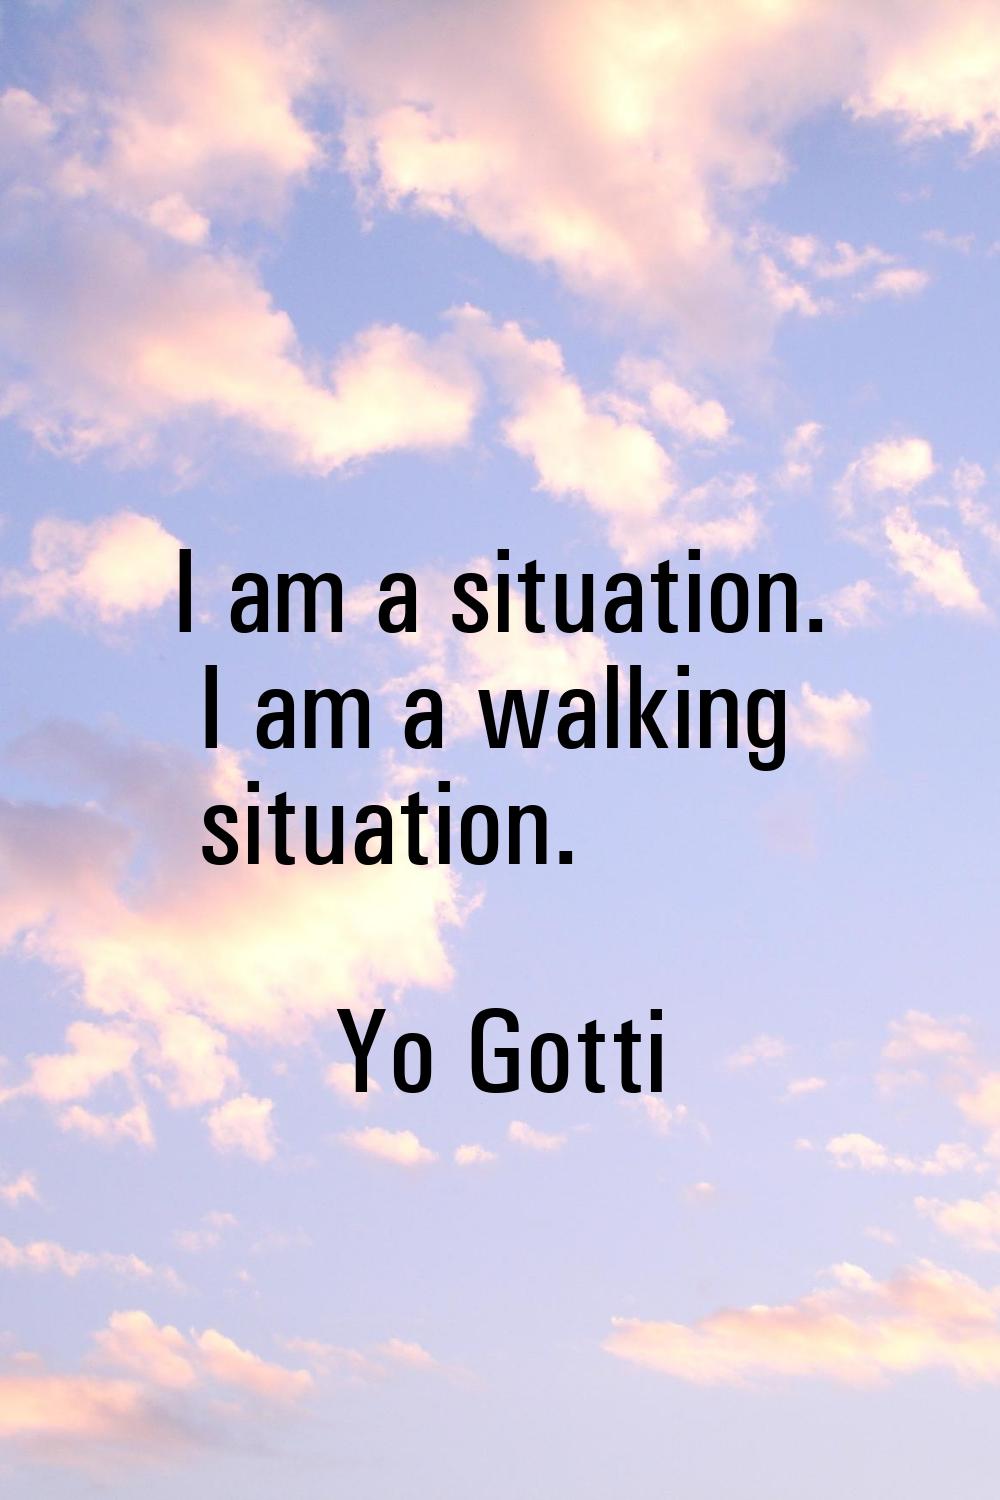 I am a situation. I am a walking situation.